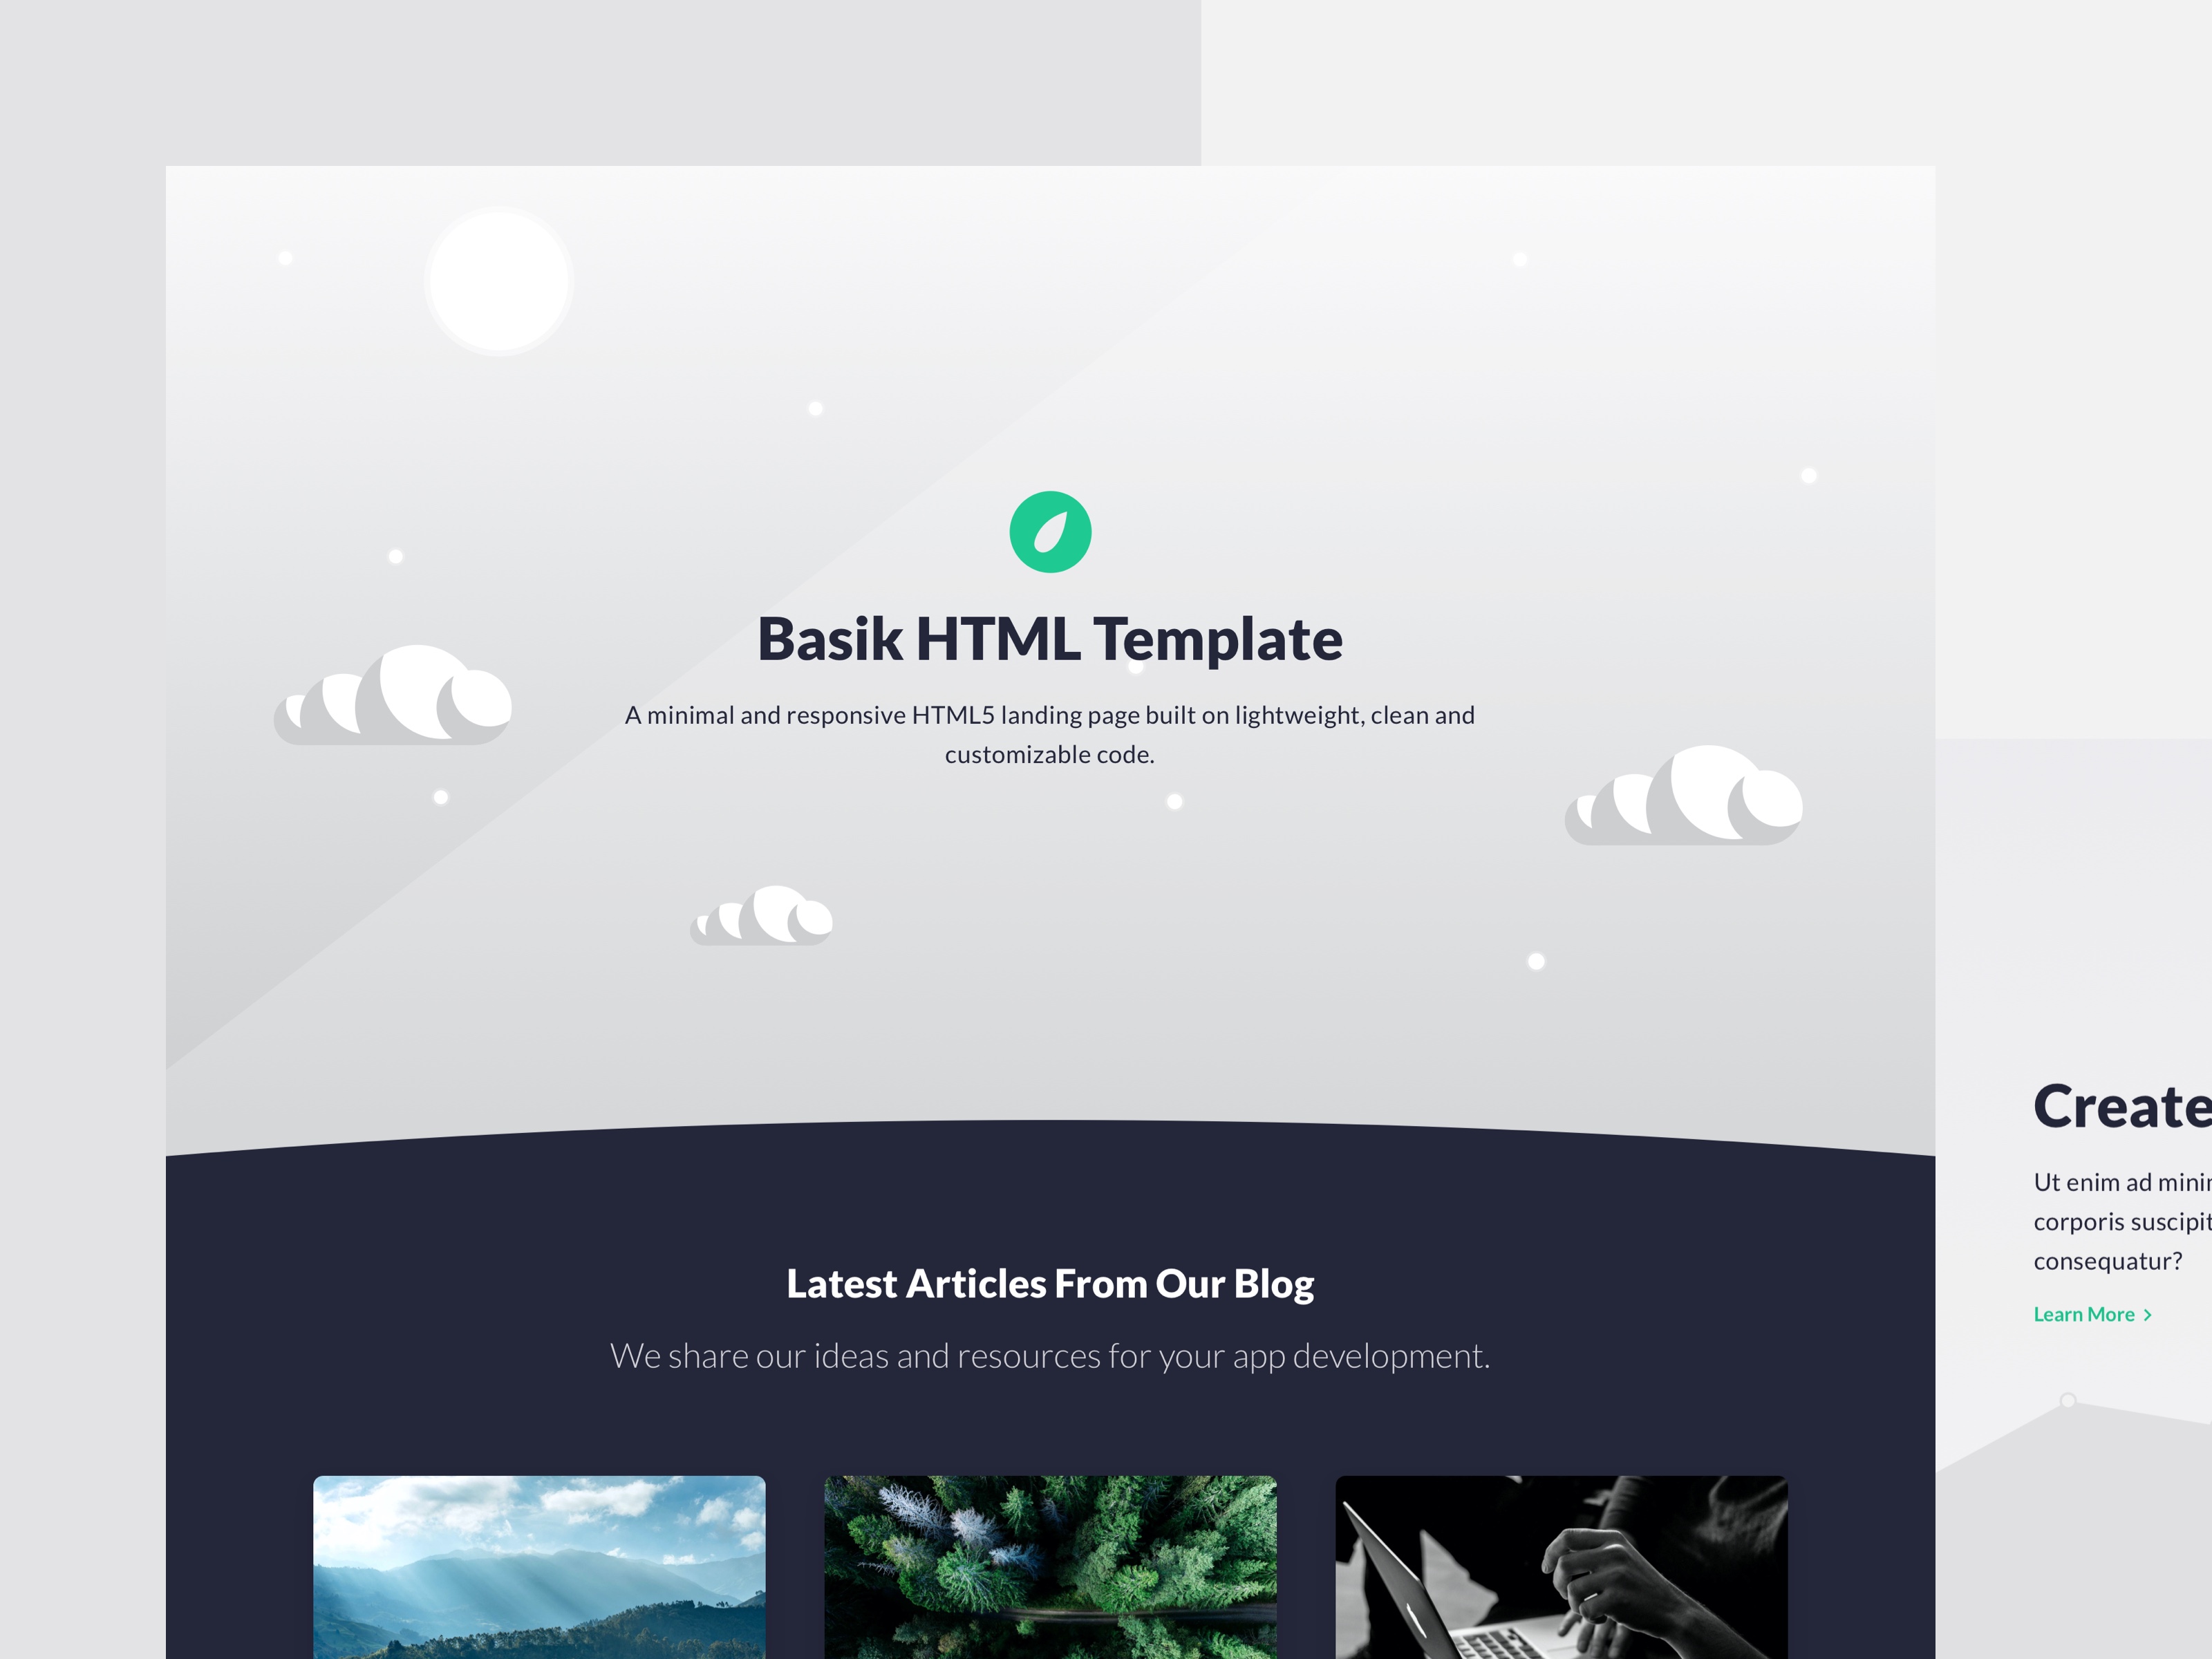 Basik HTML Template